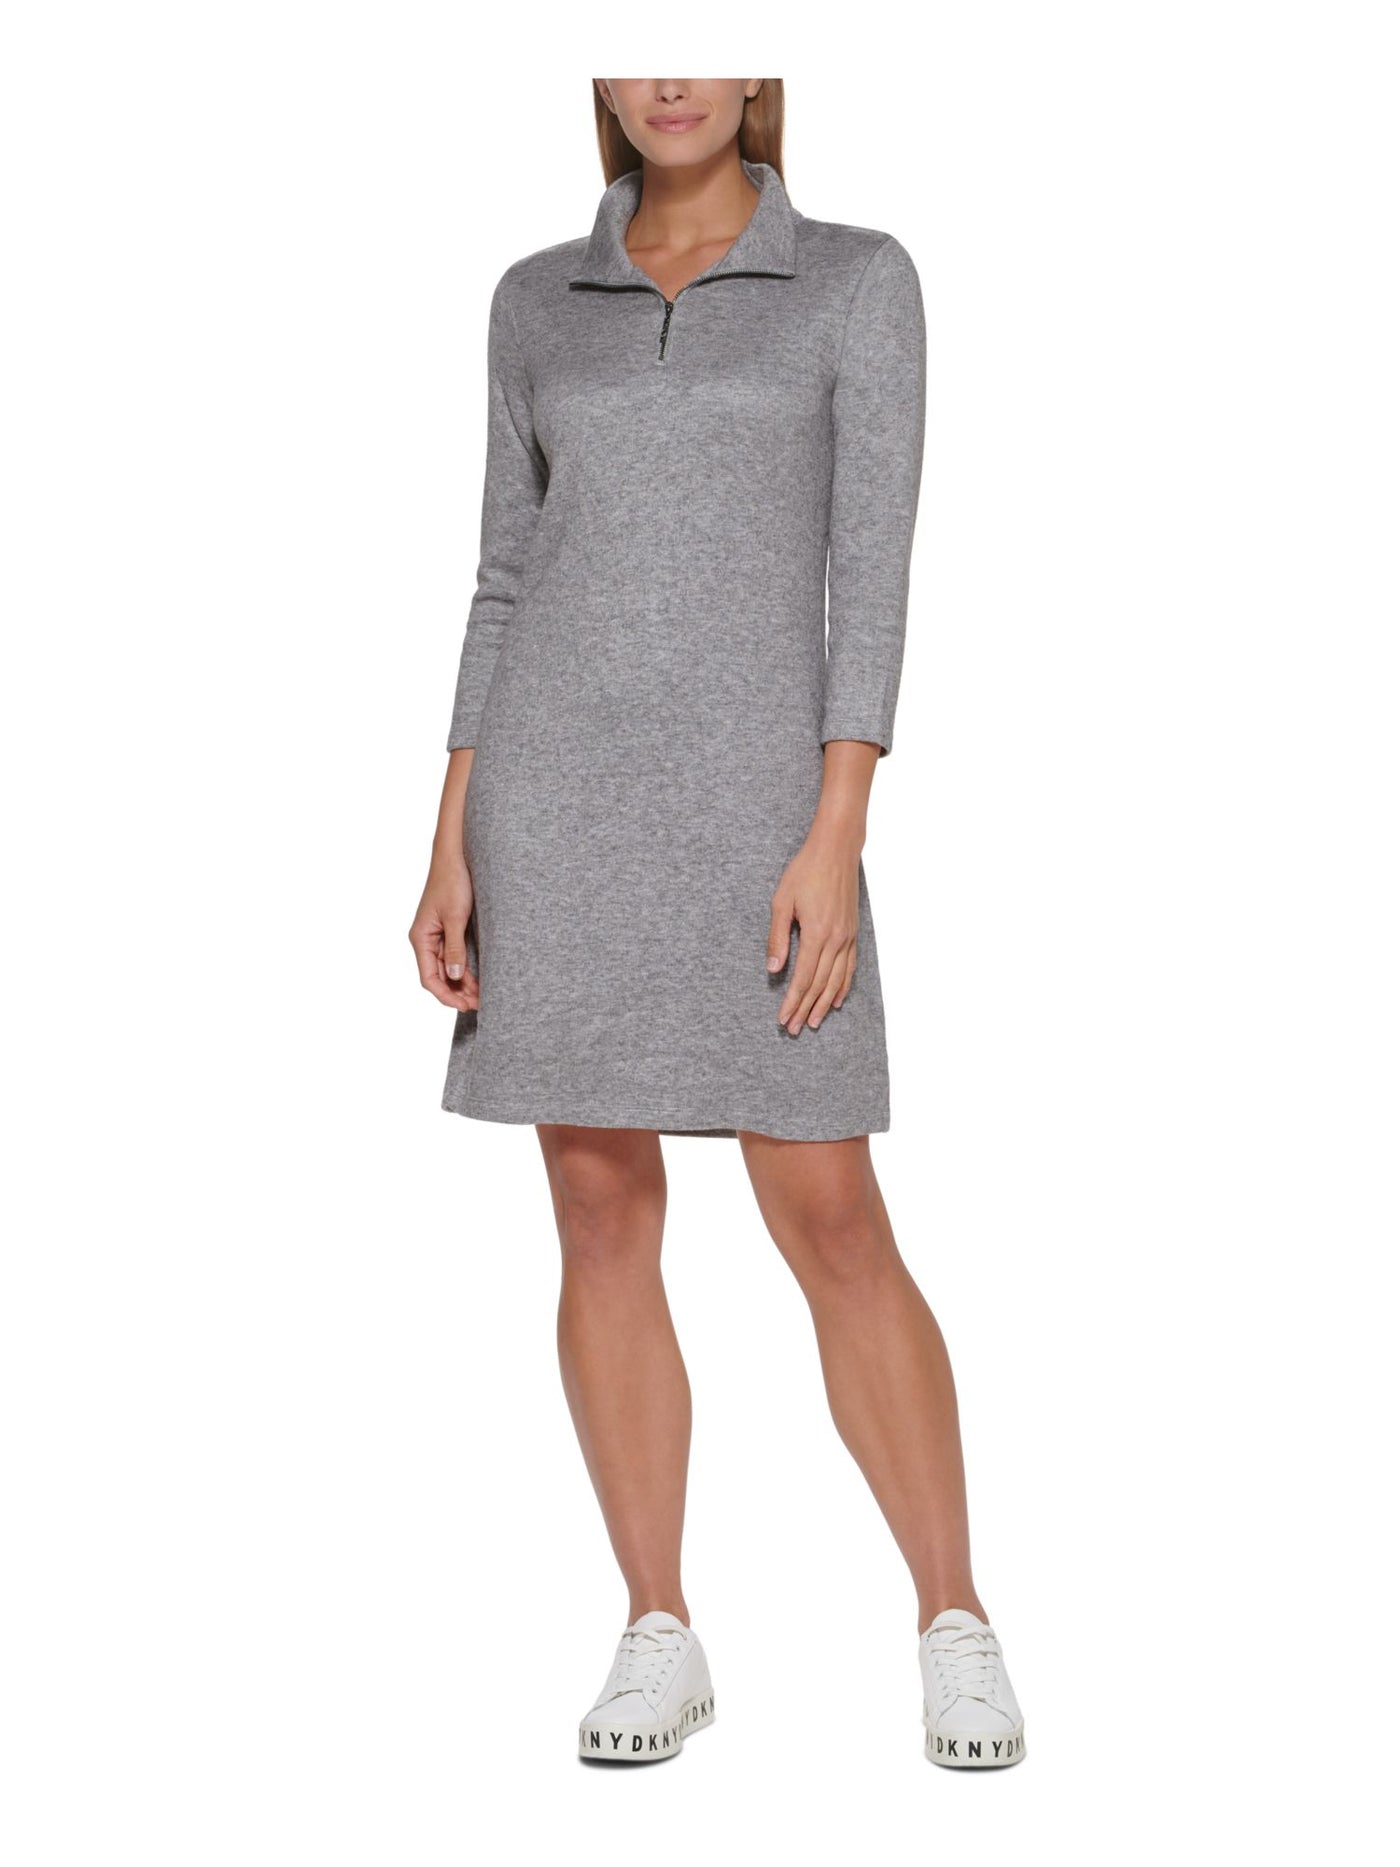 DKNY Womens Gray Knit Zippered Quarter Zip Heather Long Sleeve Mock Neck Above The Knee Sweater Dress M